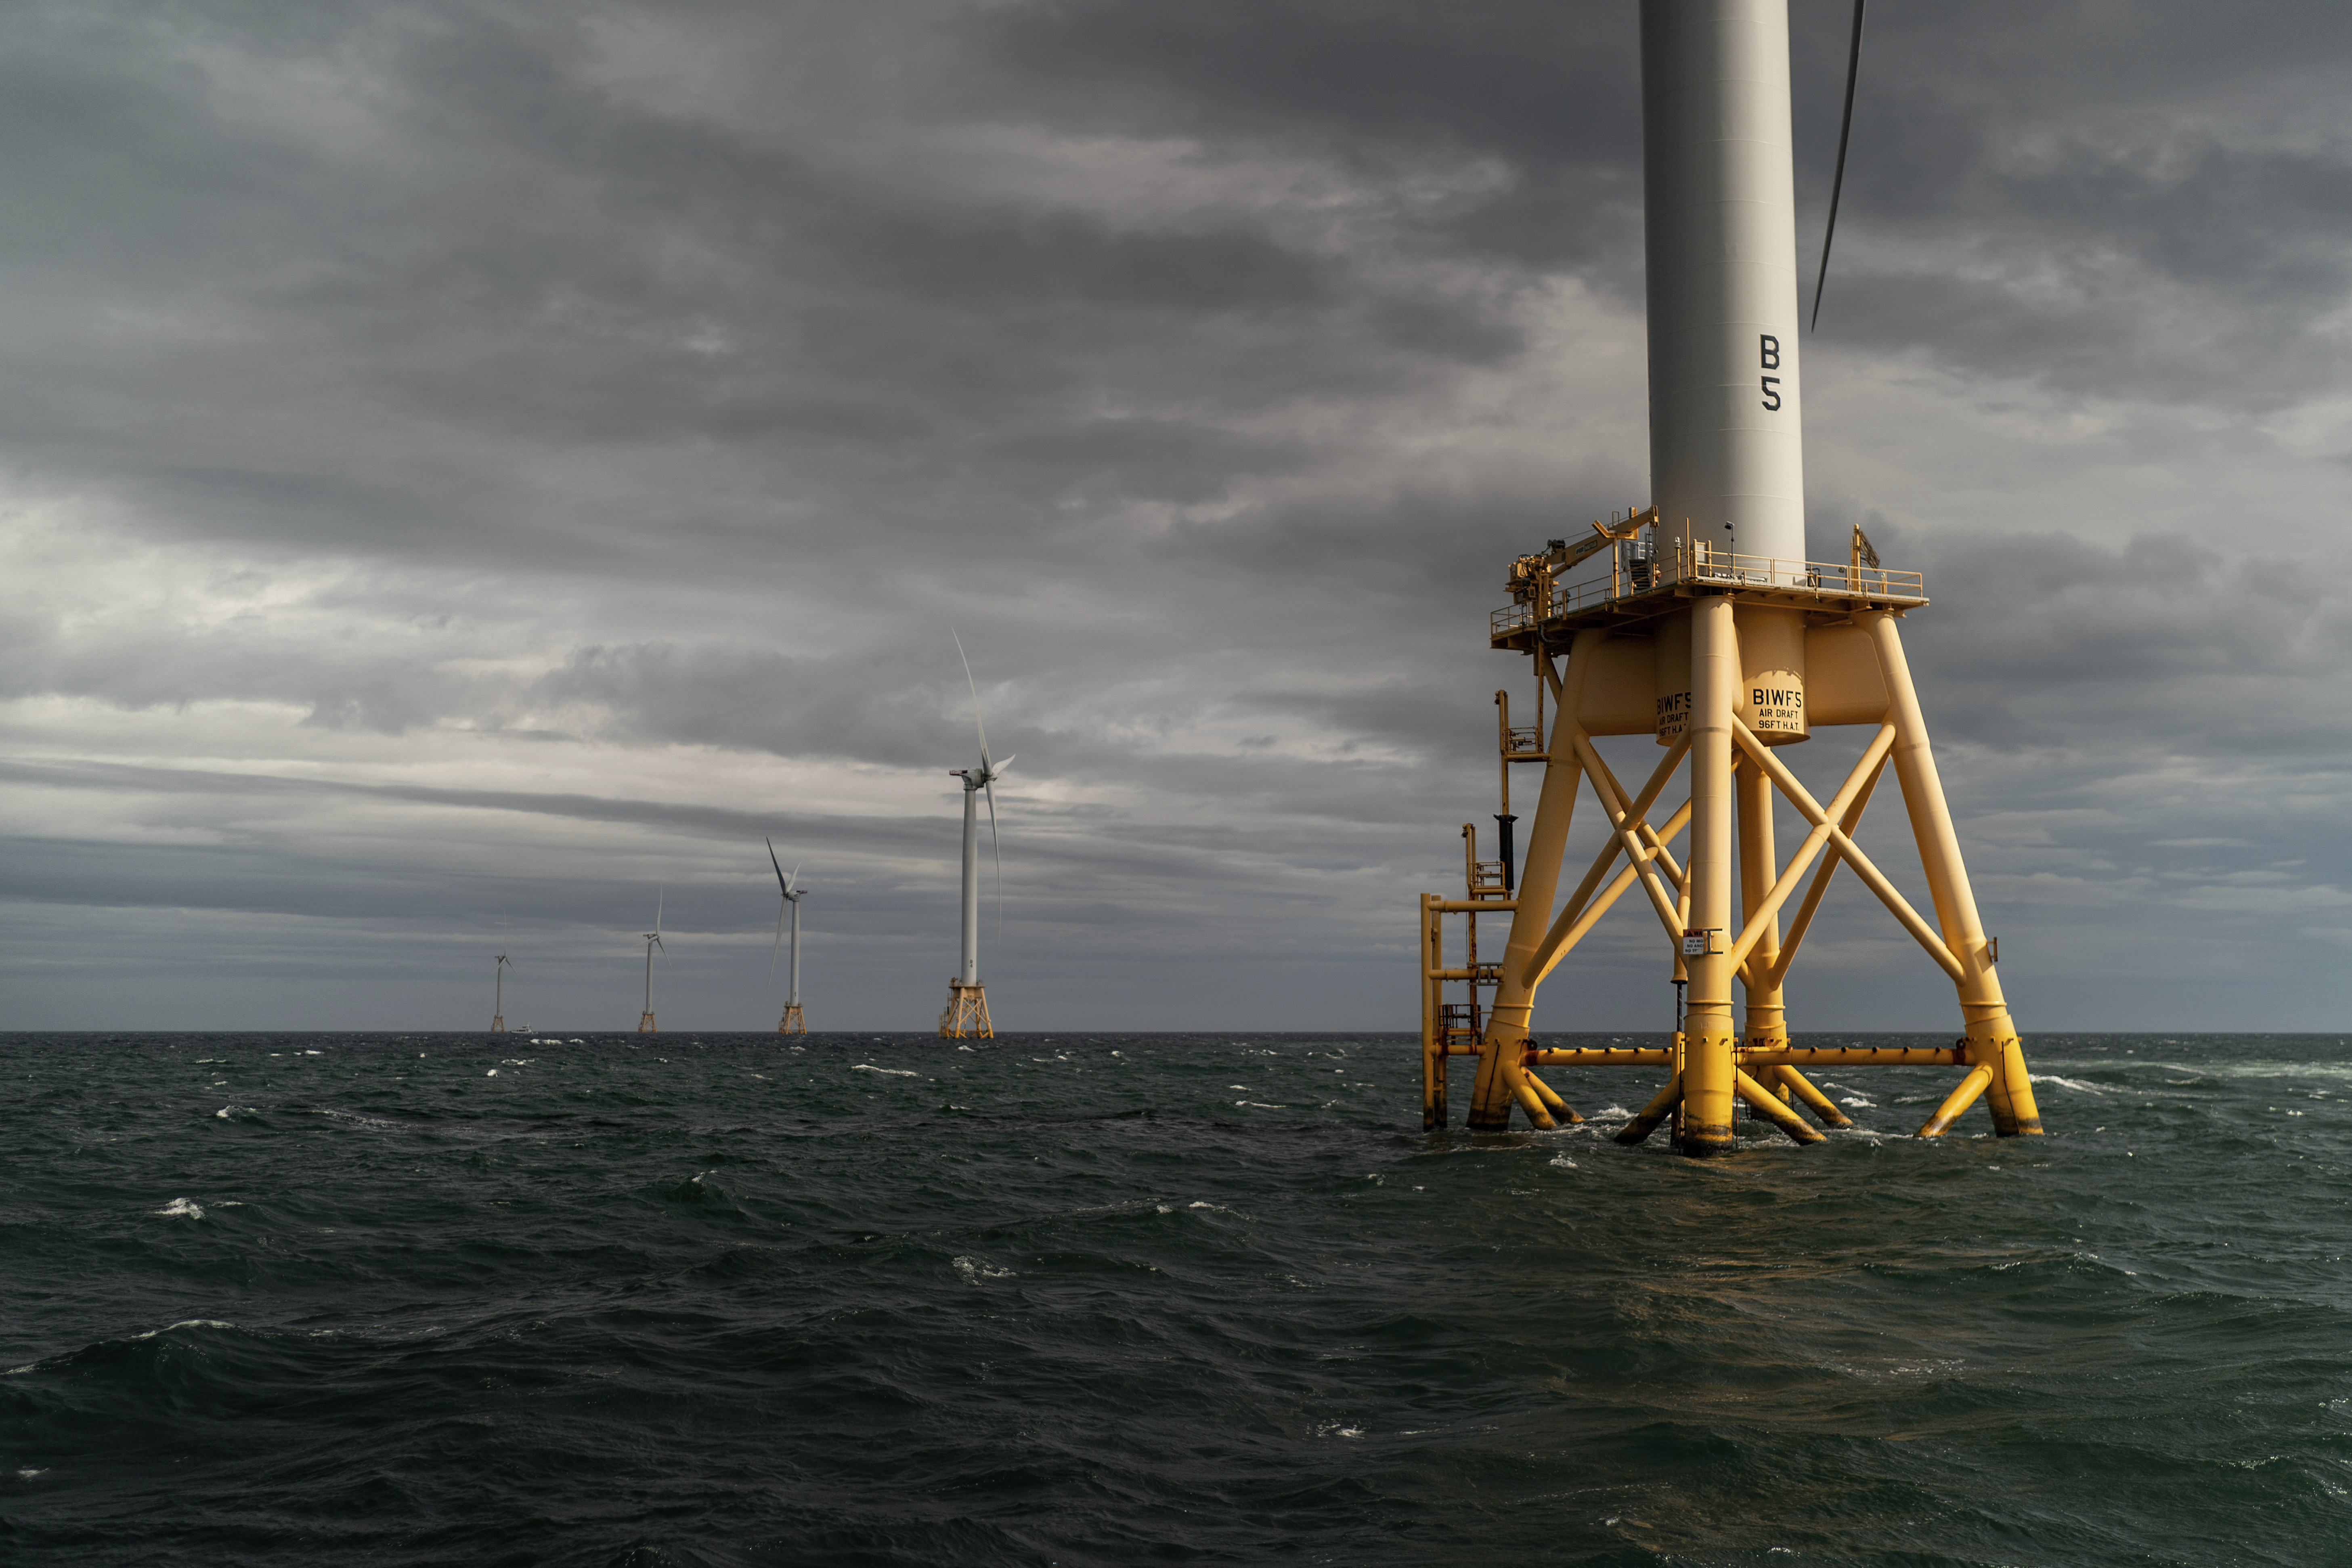 Sale jumpstarts development of floating, offshore wind power in US